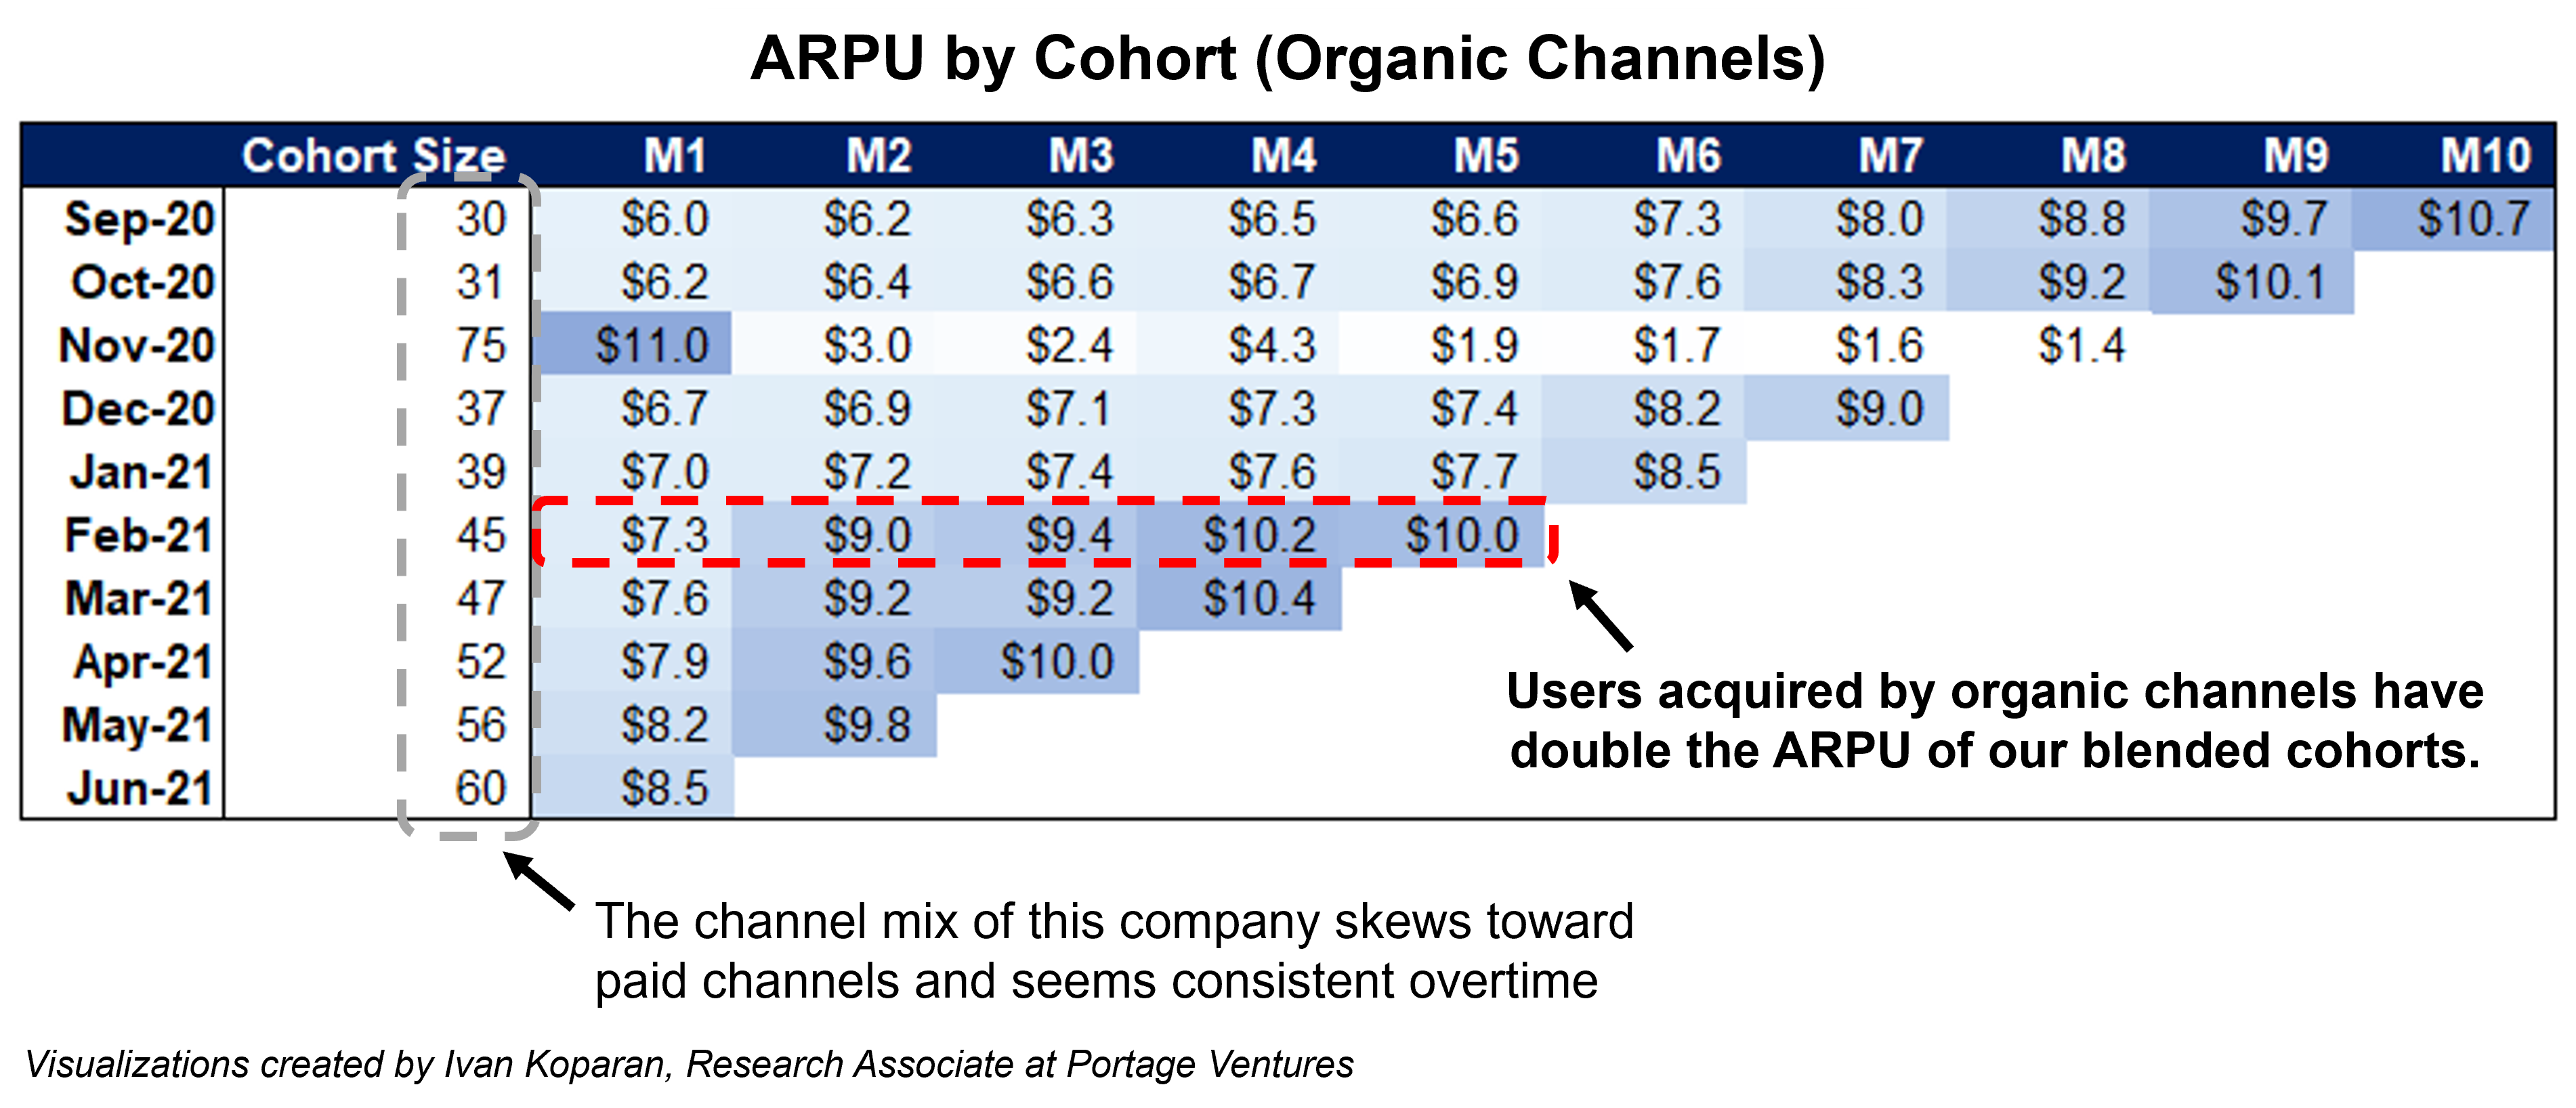 ARPU by cohort (organic channels)